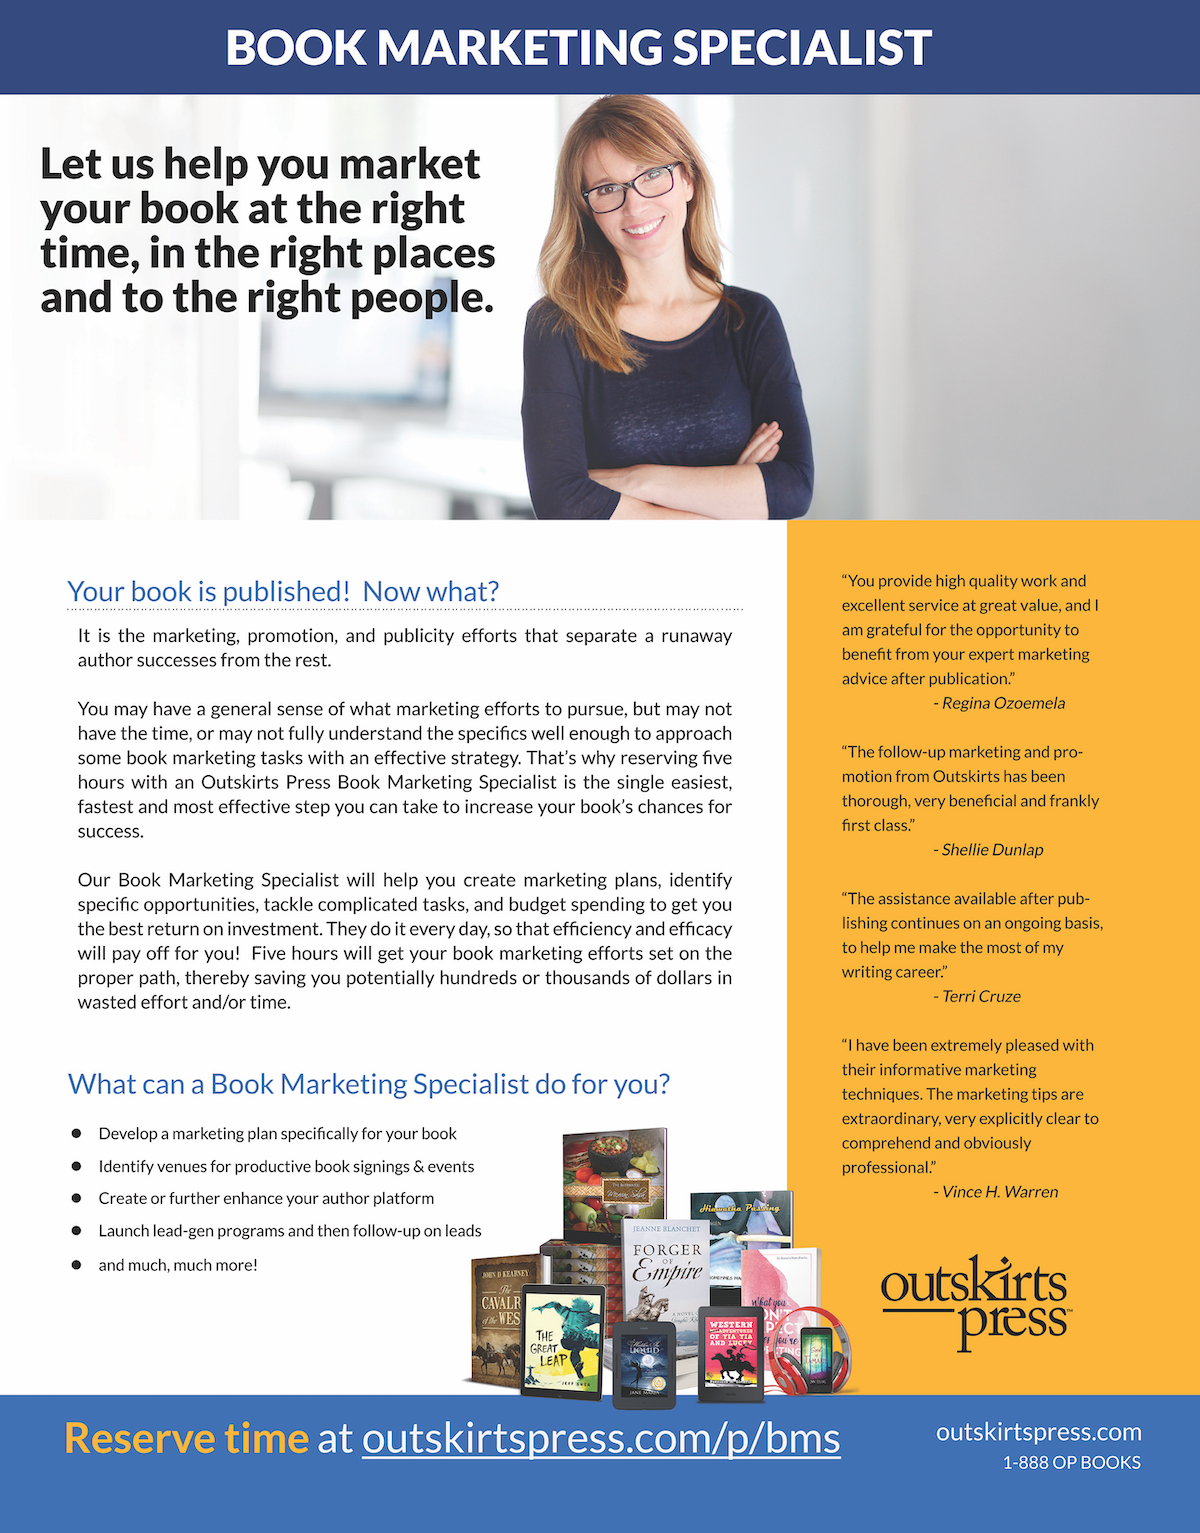 Outskirts Press Book Marketing Strategist Service